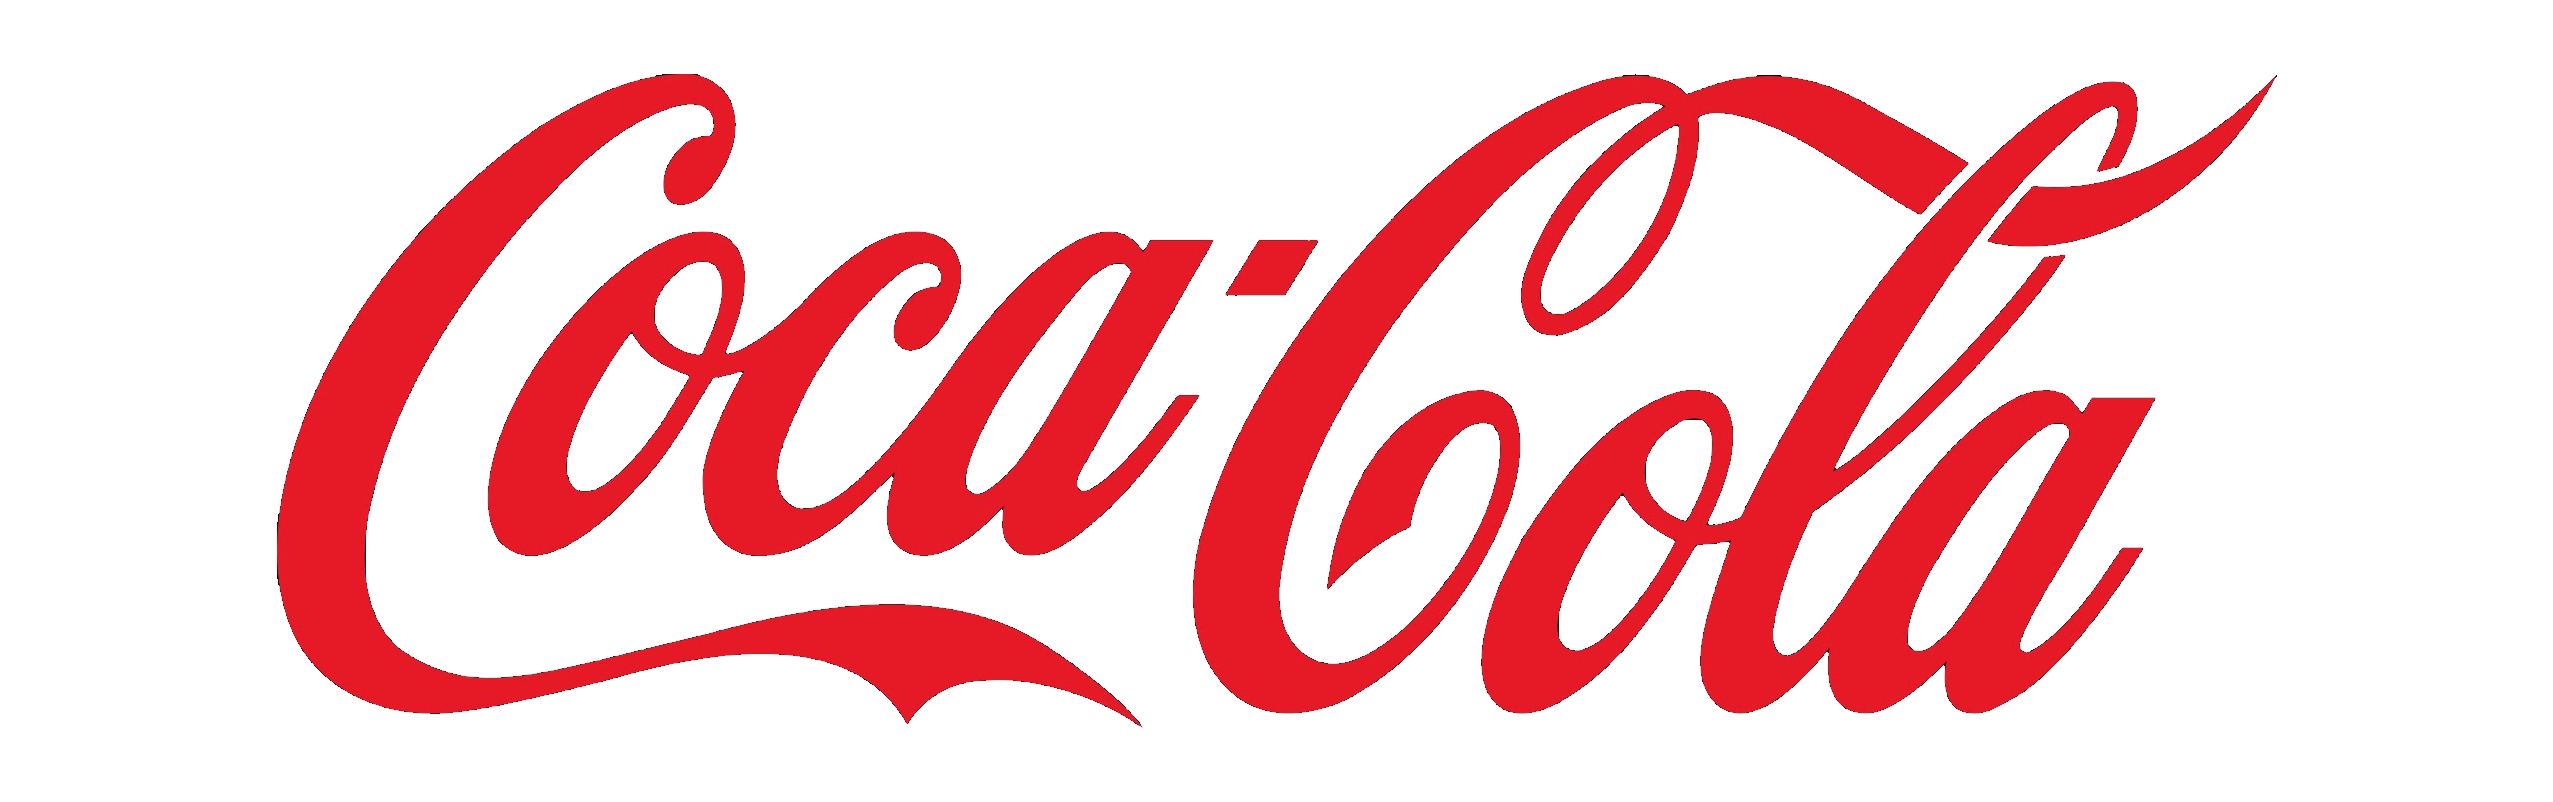 cocacola_logo_PNG14